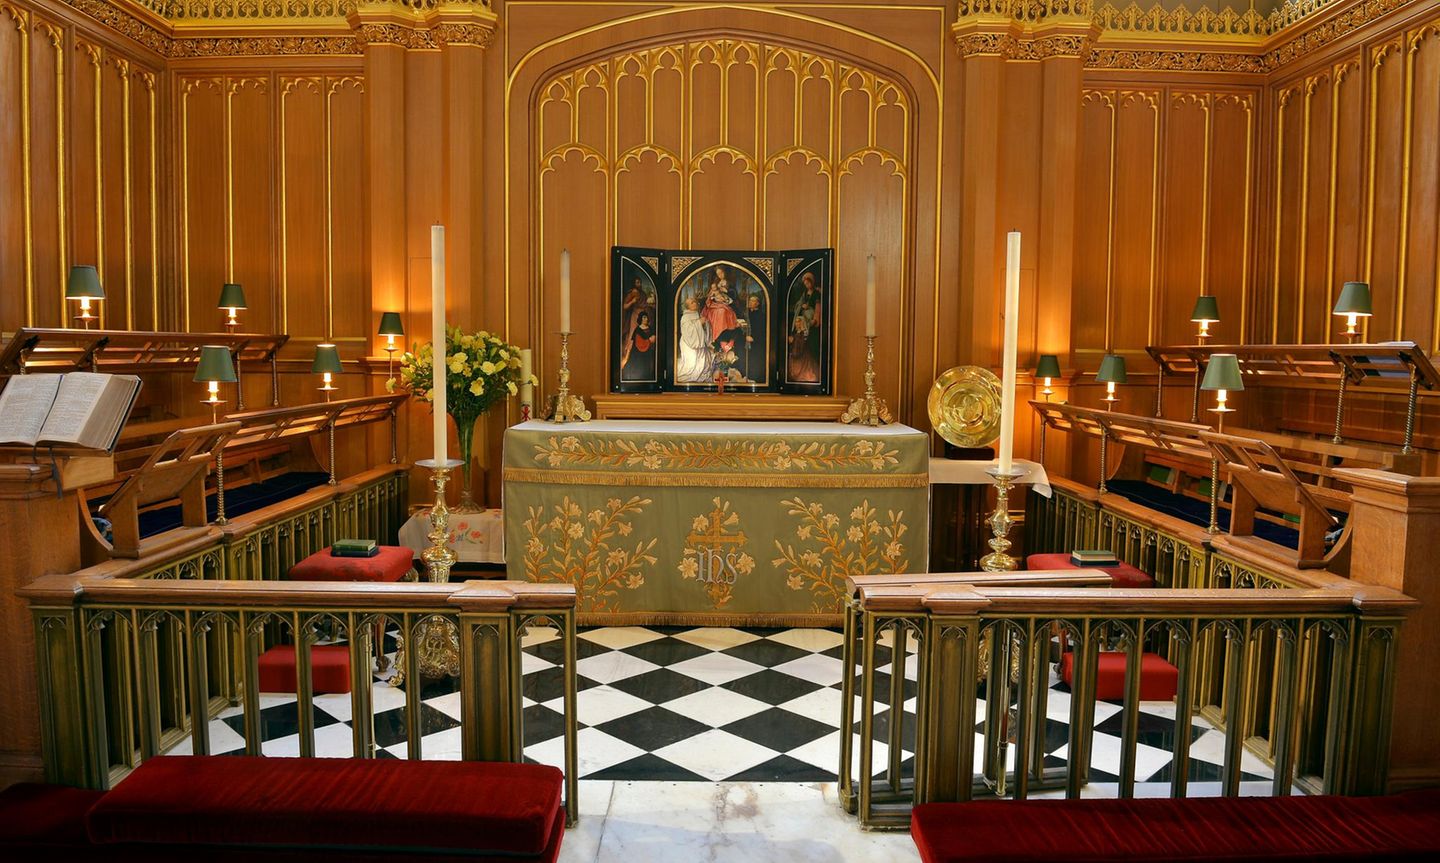 Blick auf den Altarraum der "Chapel Royal" im " St. James's Palace".